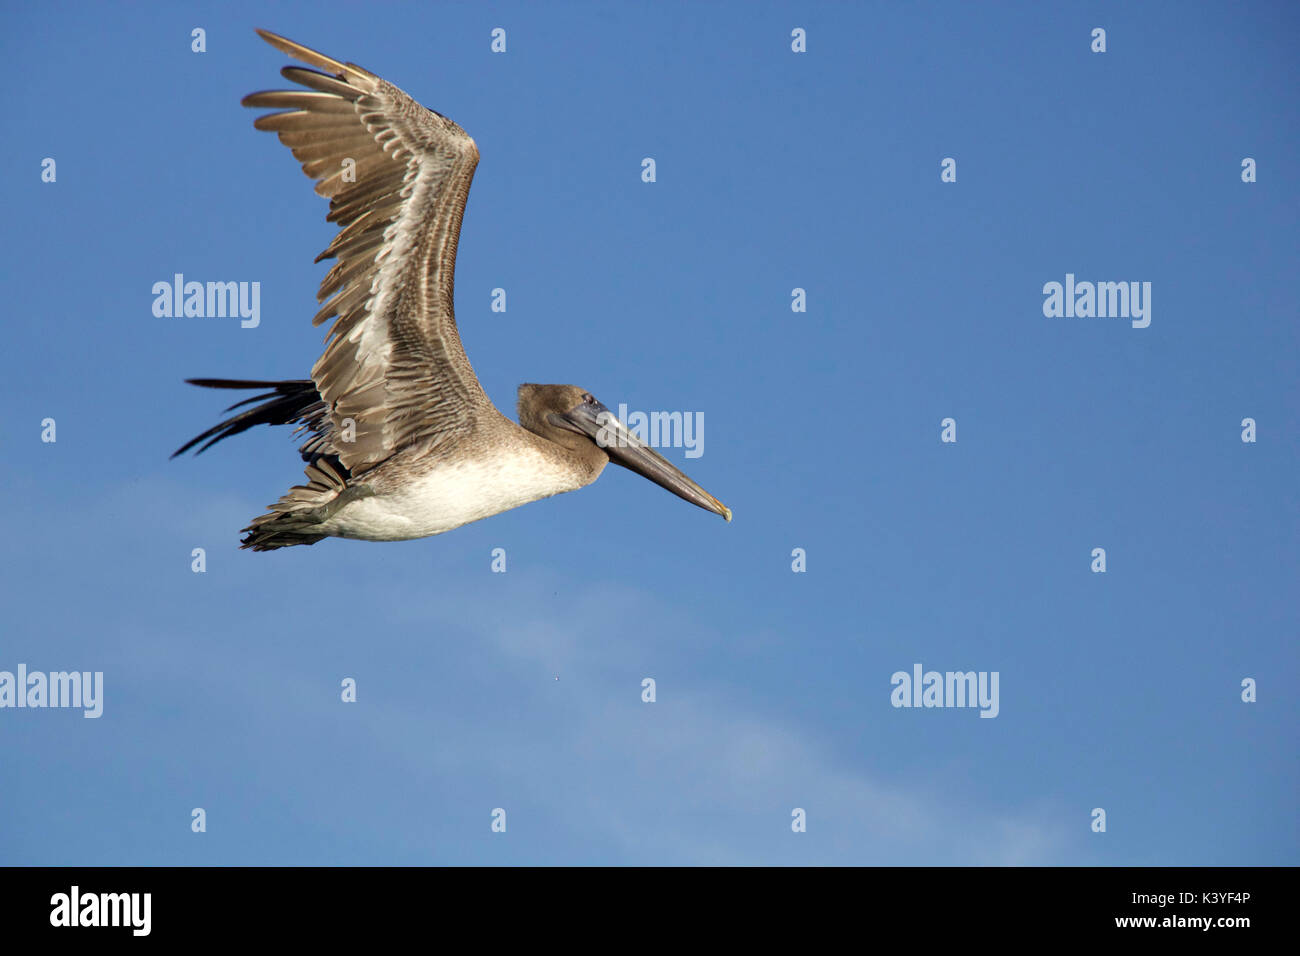 A pelican in flight at Bahia Honda State Park in Florida Stock Photo